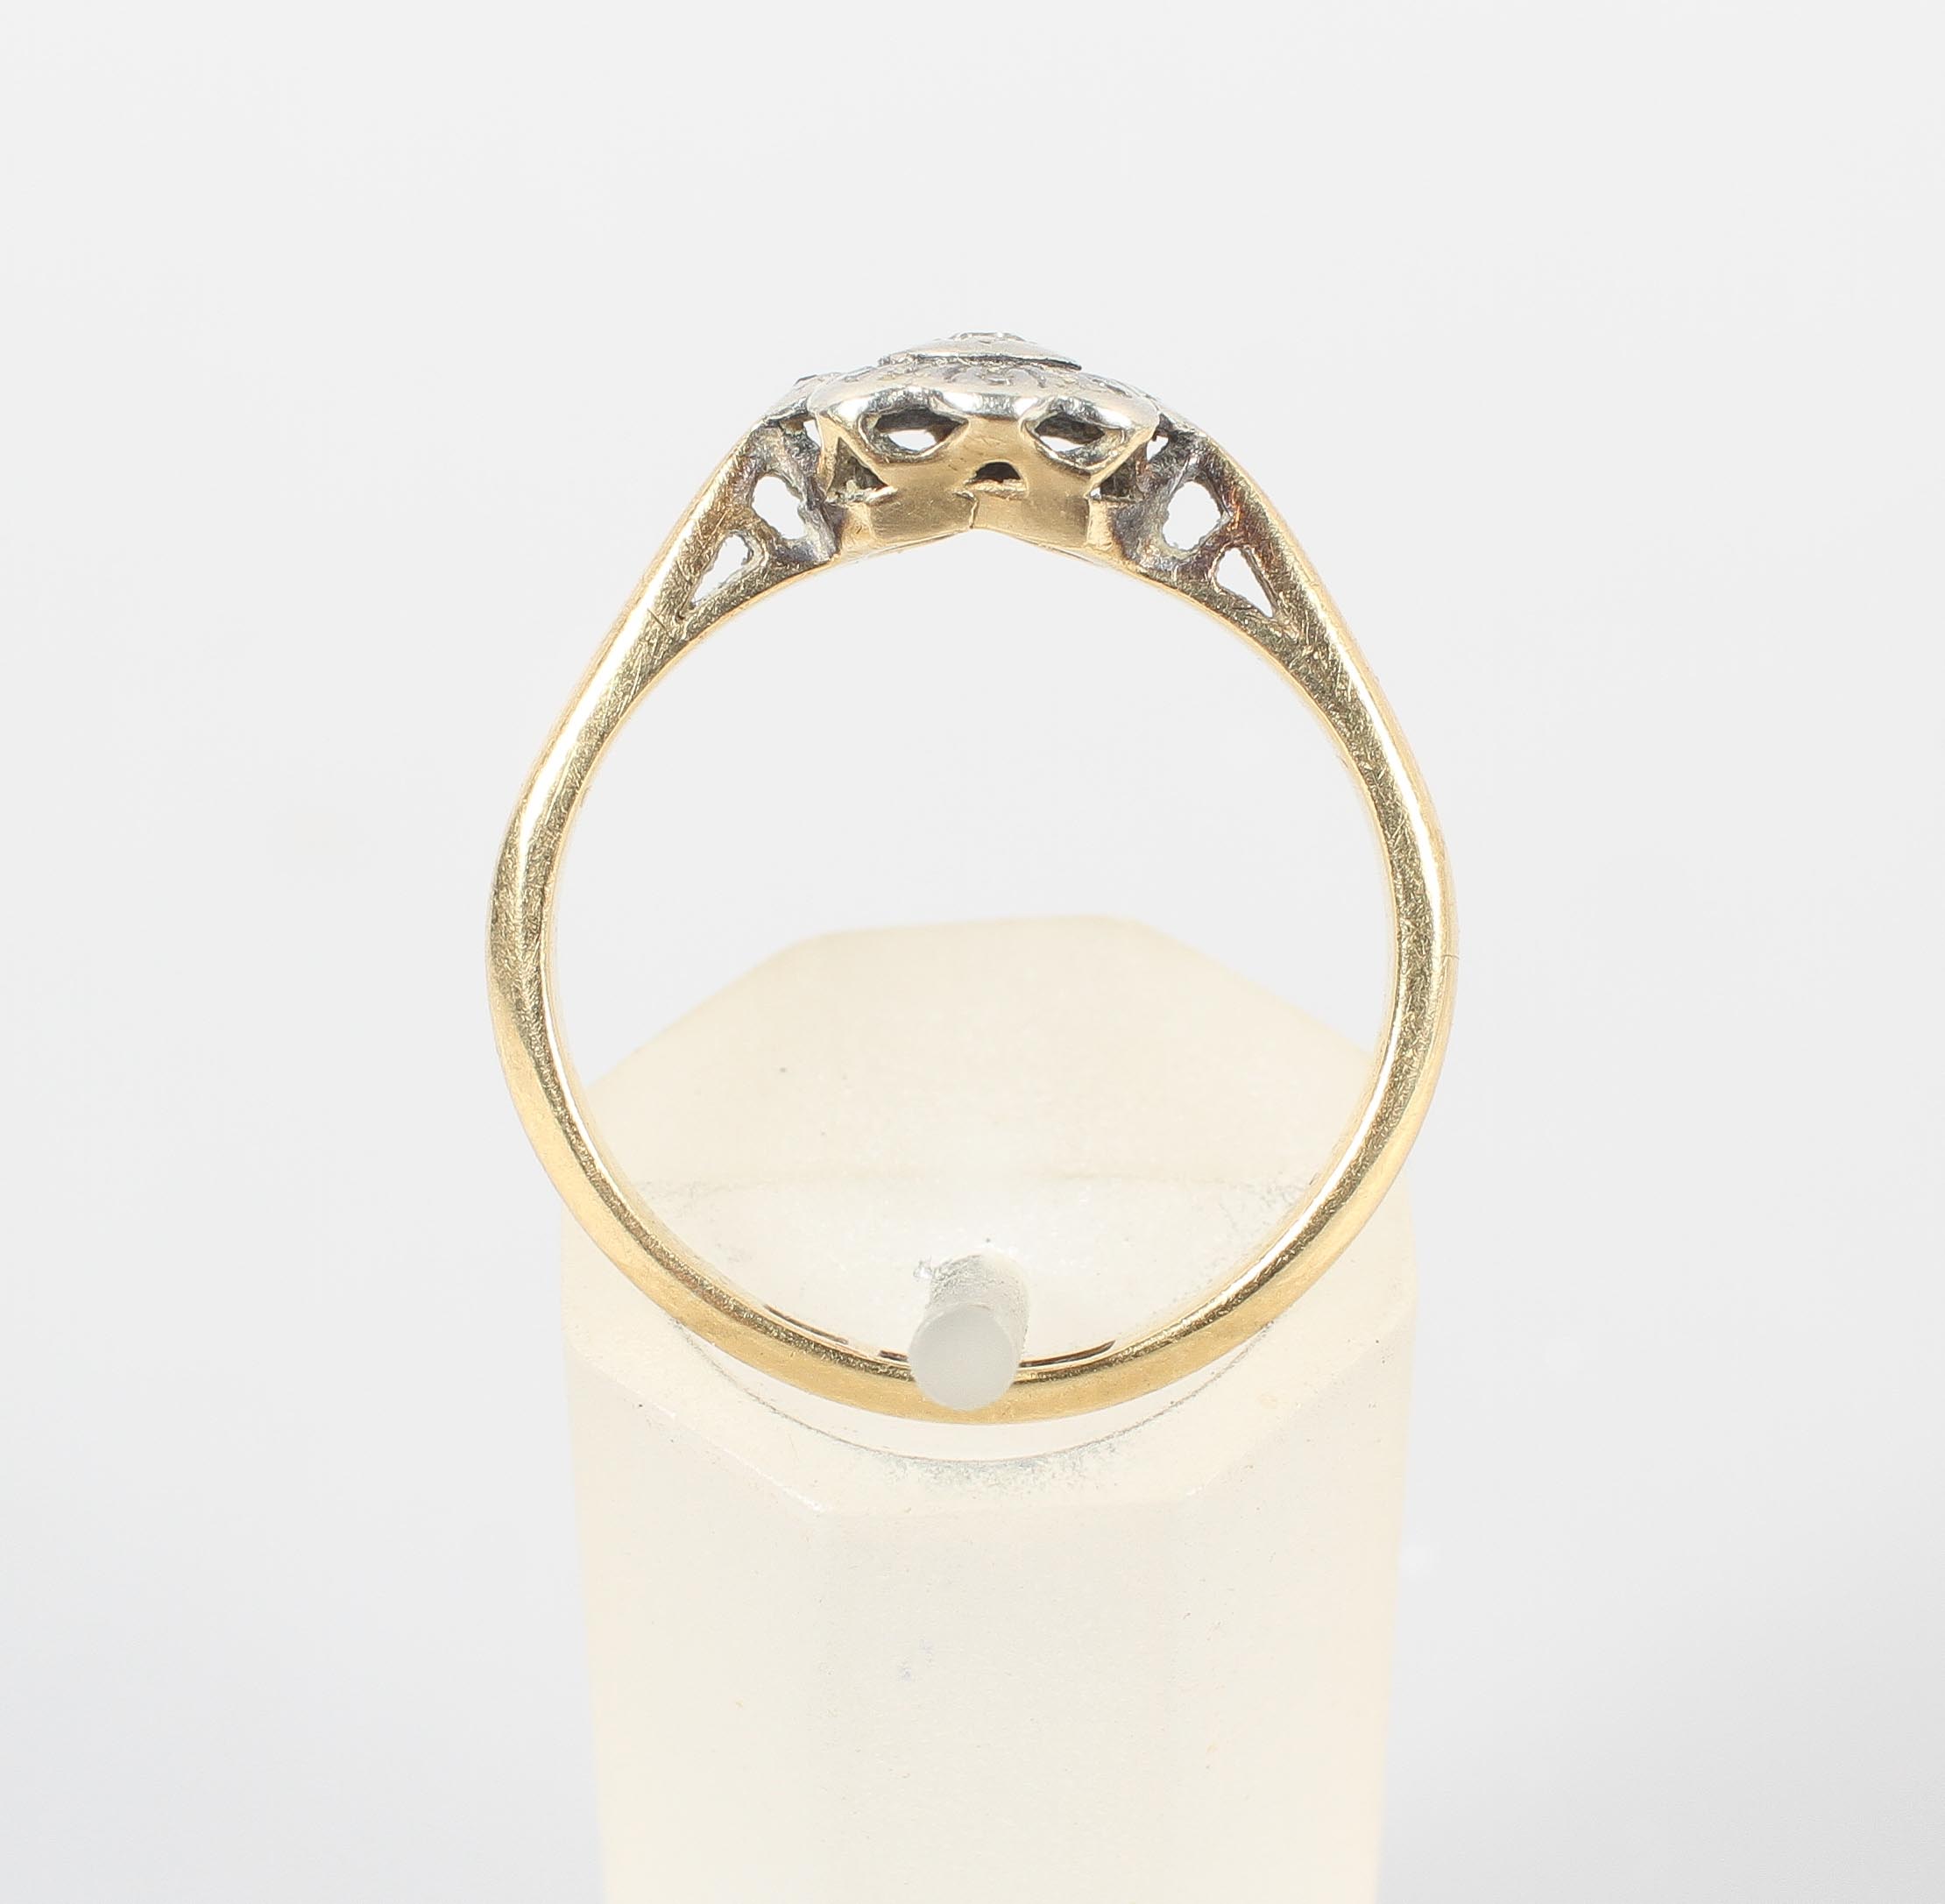 A yellow and white metal illusion set single stone diamond ring. No hallmark - stamped 18ct Plat. - Image 2 of 3